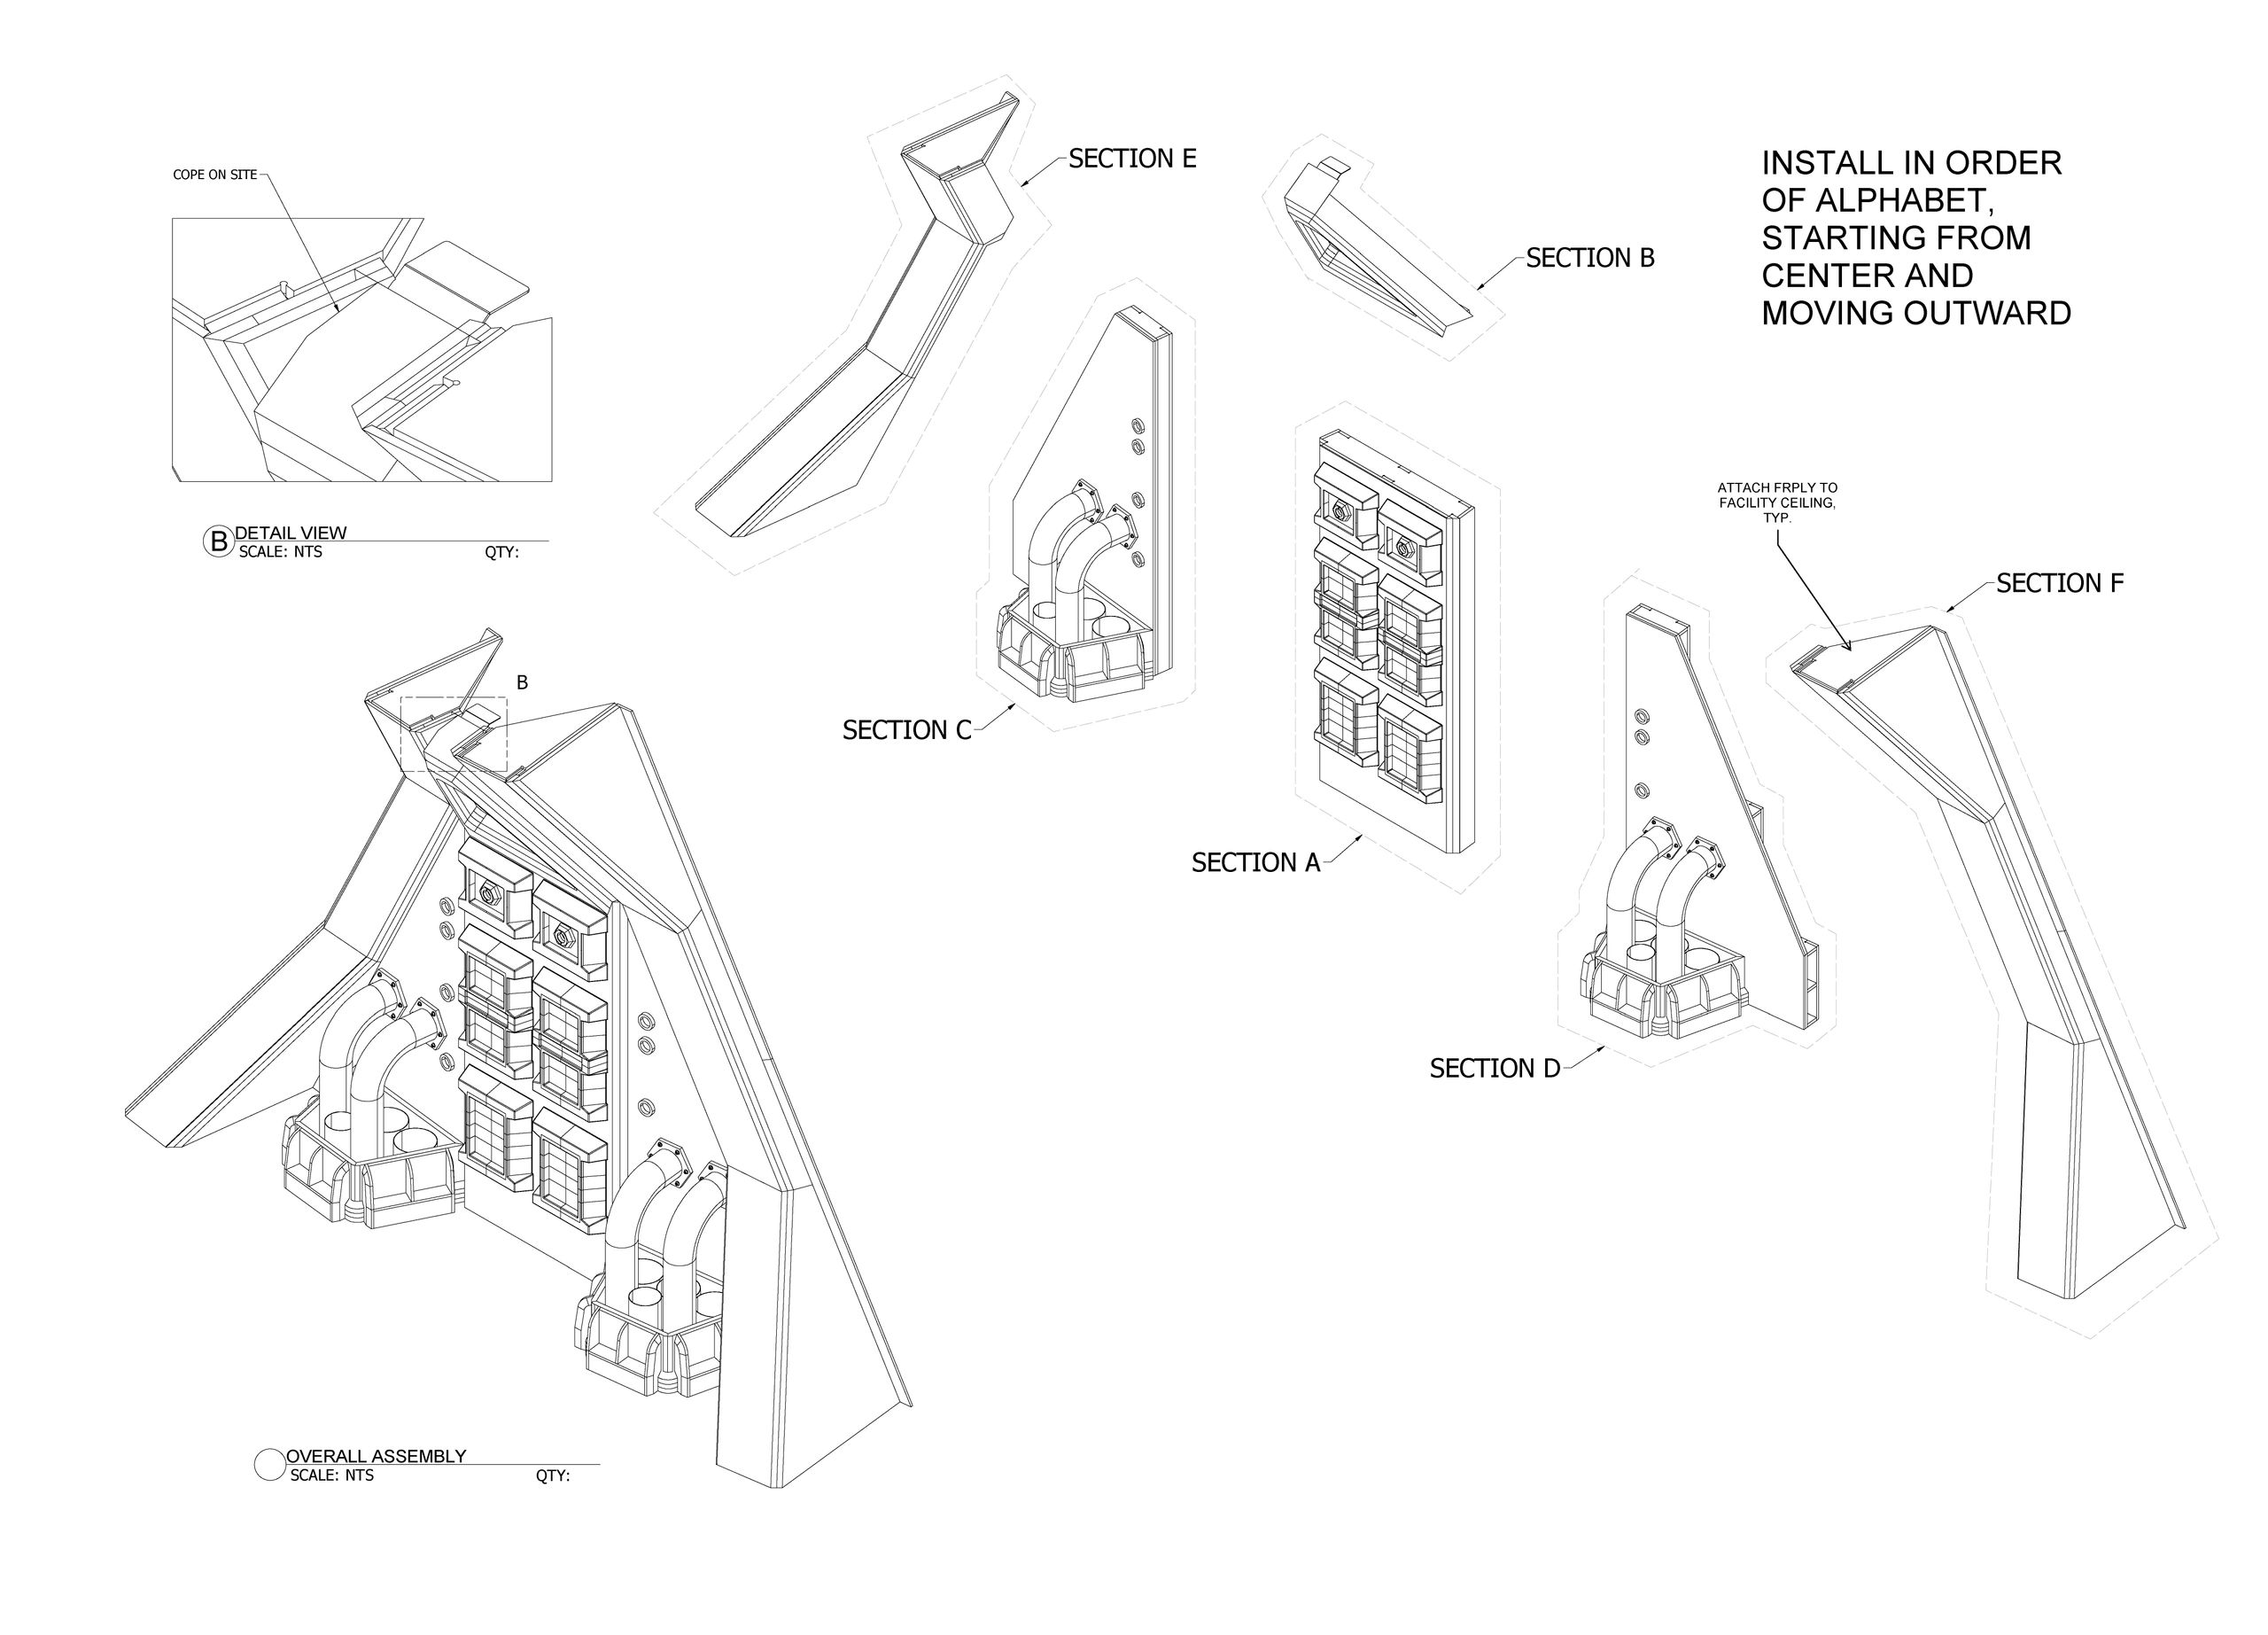 local 44 iatse construction drawings fabrication design set building cnc rhino 3d modeling film tv